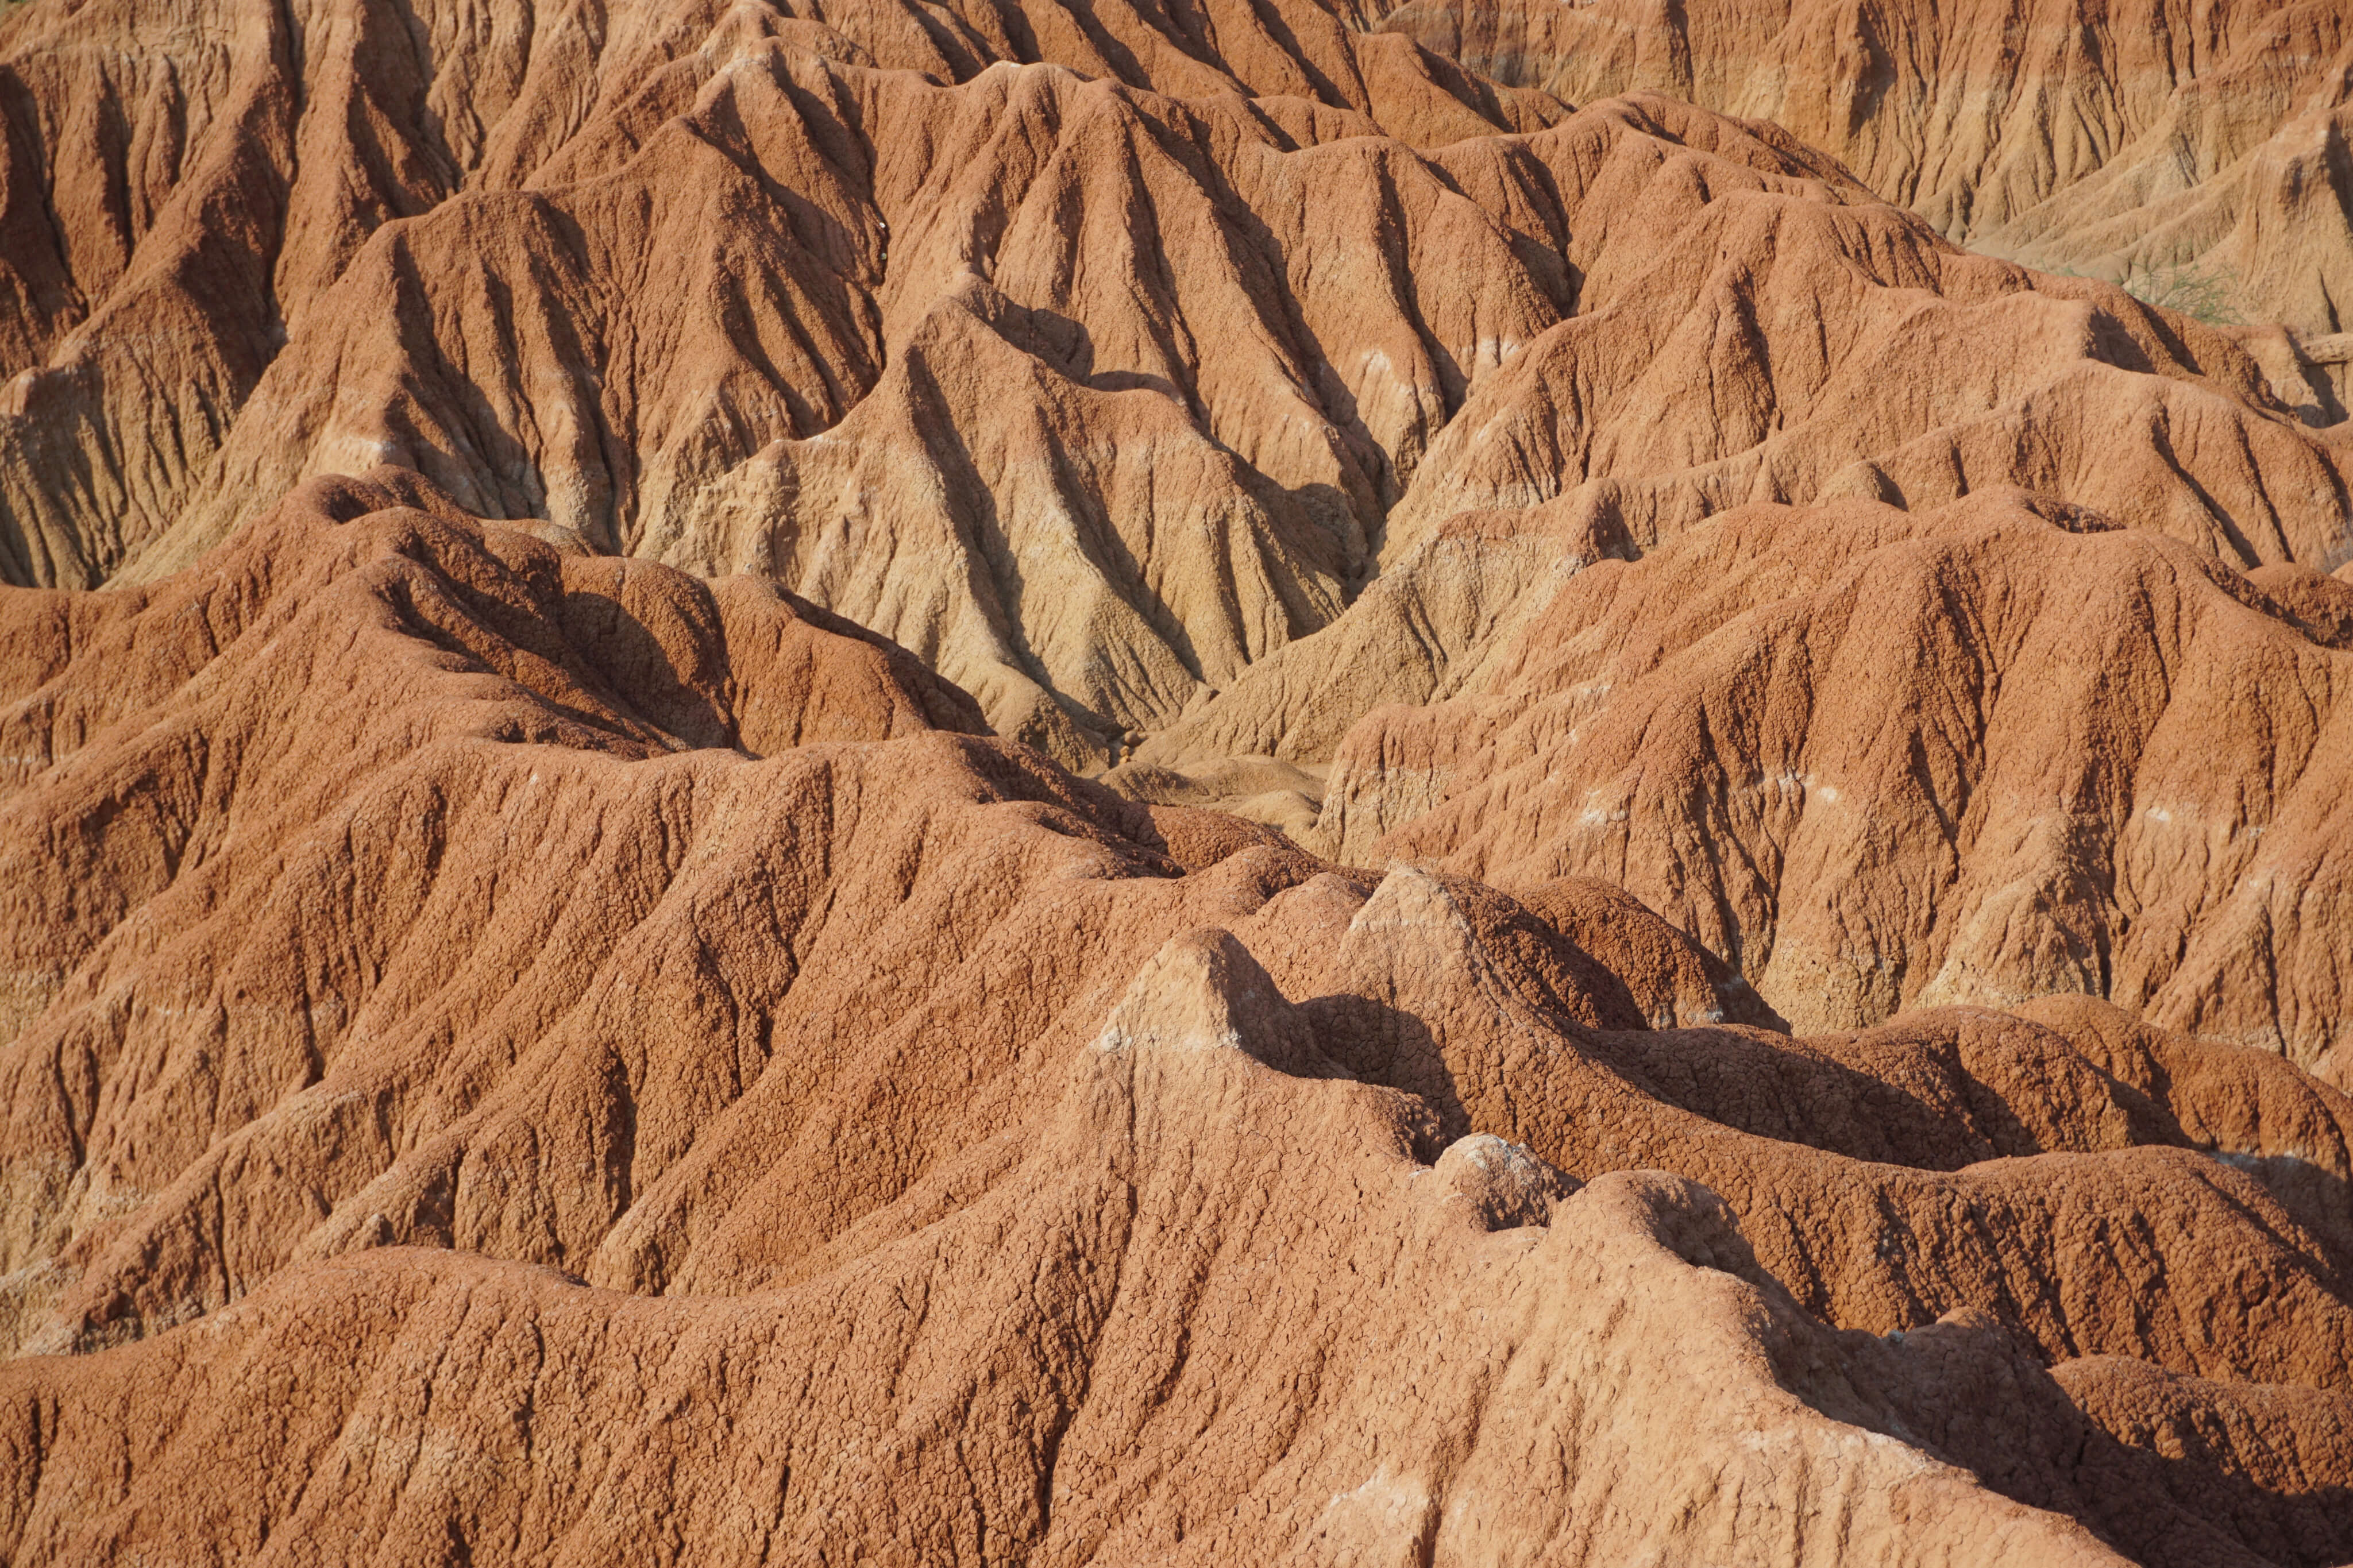 The Tatacoa Deserts rocky surface